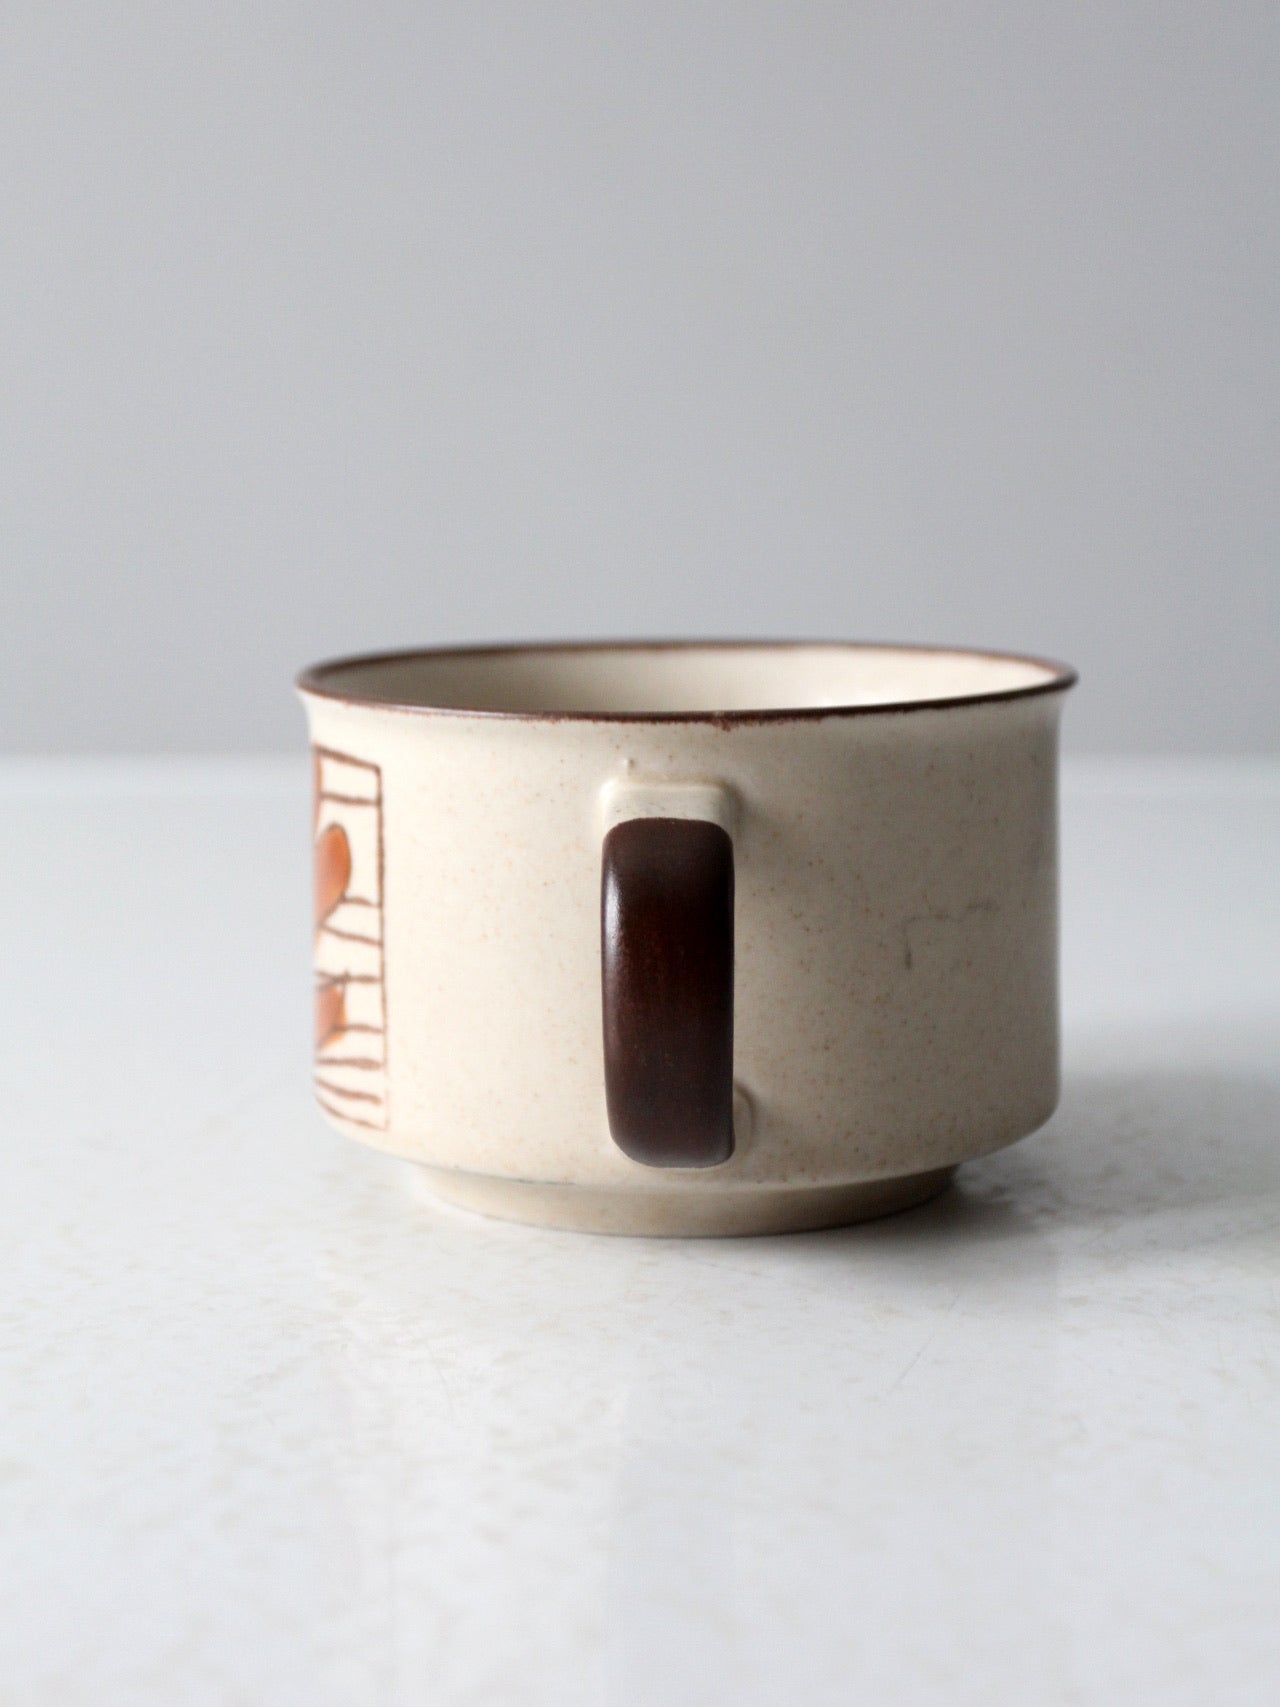 vintage Japanese Otagiri style stoneware mug